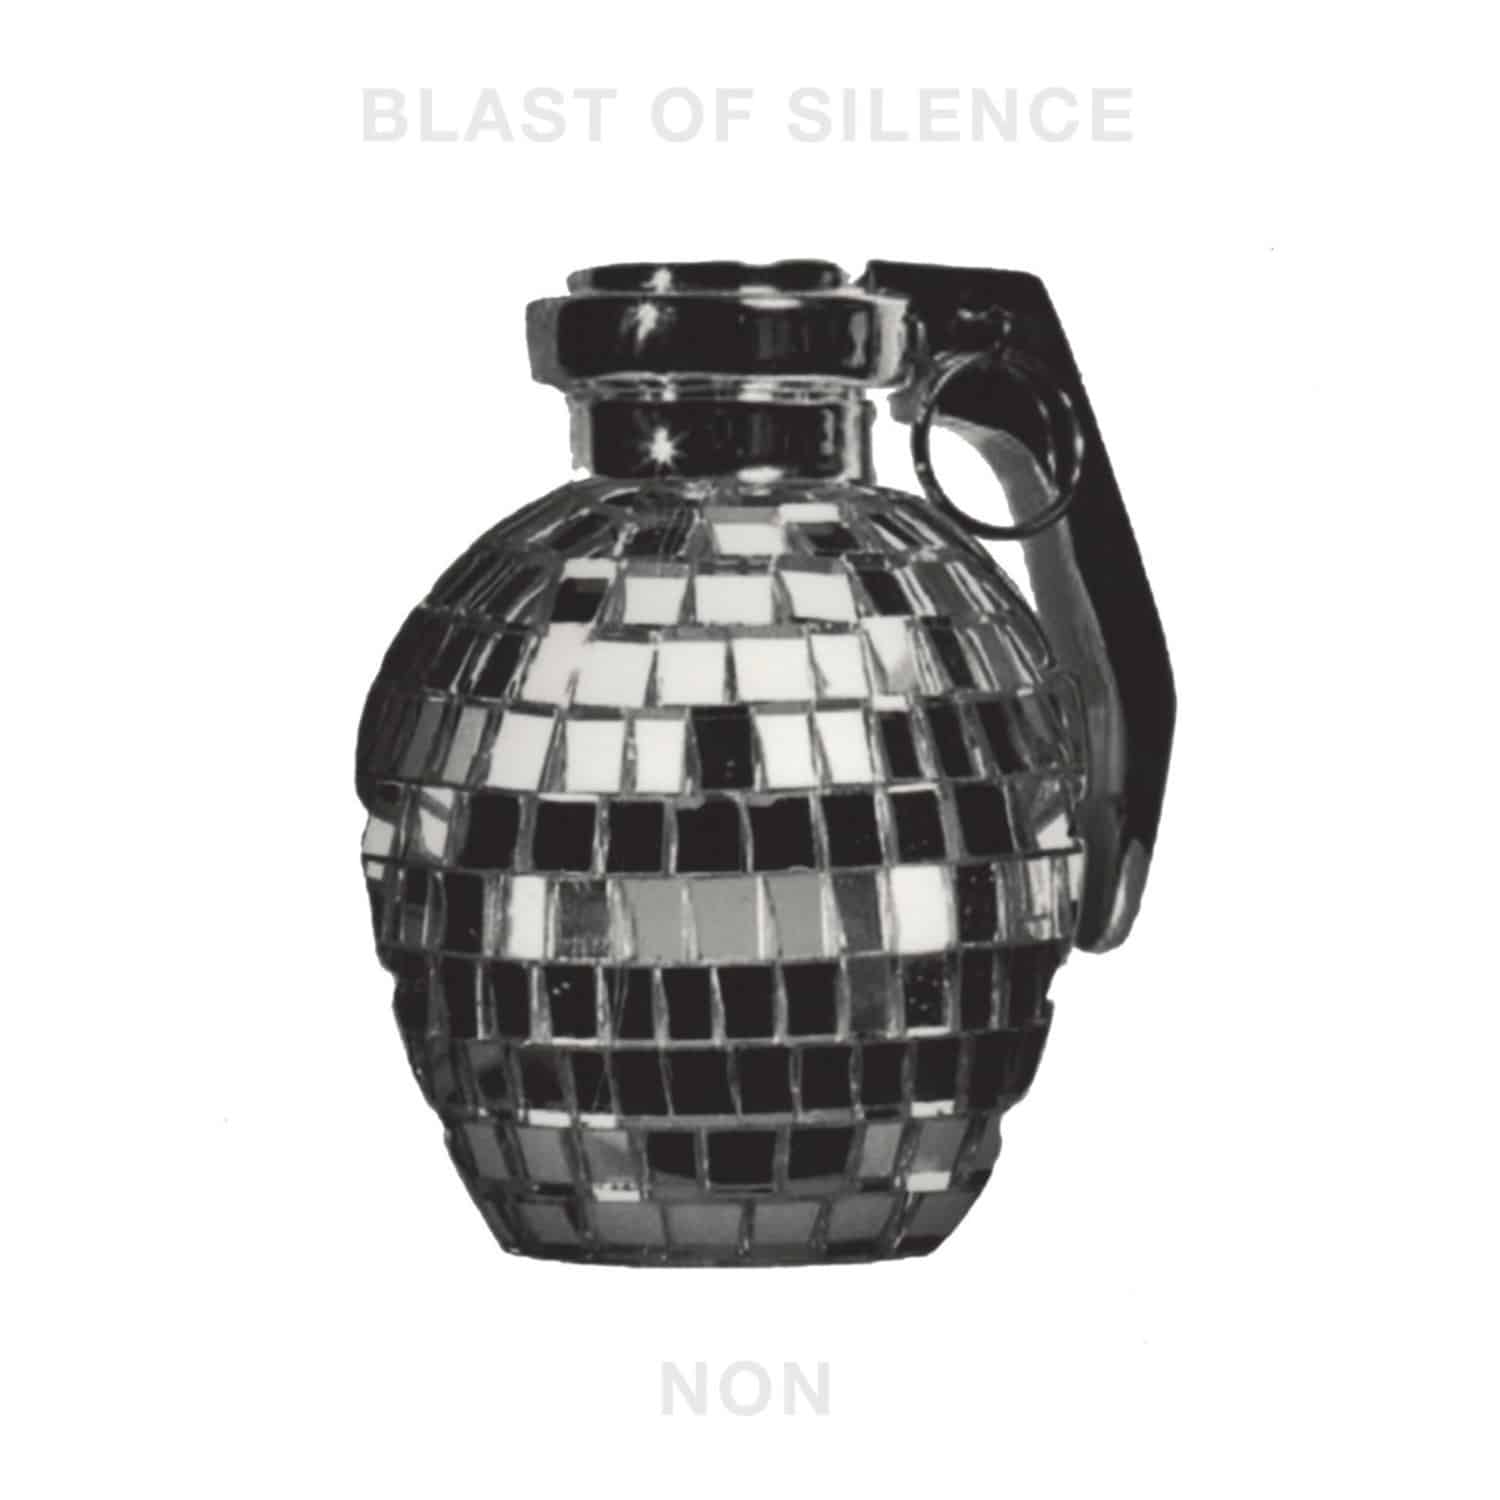 NON - BLAST OF SILENCE 